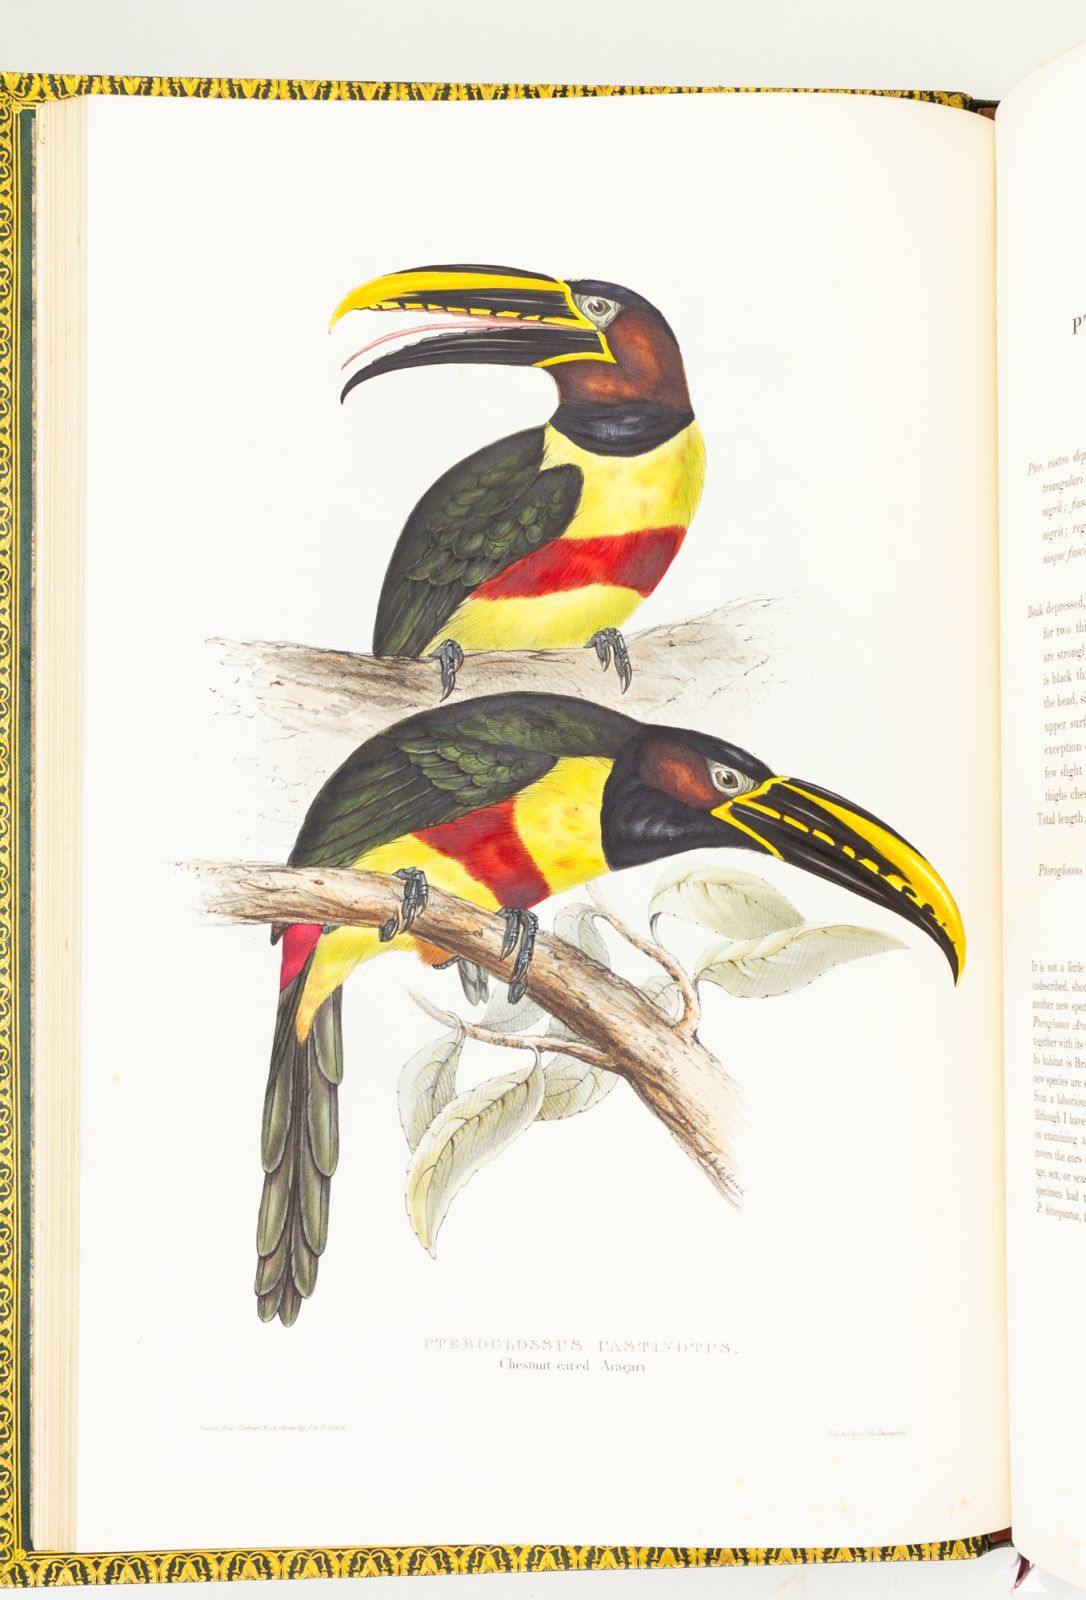 Monograph on Toucans